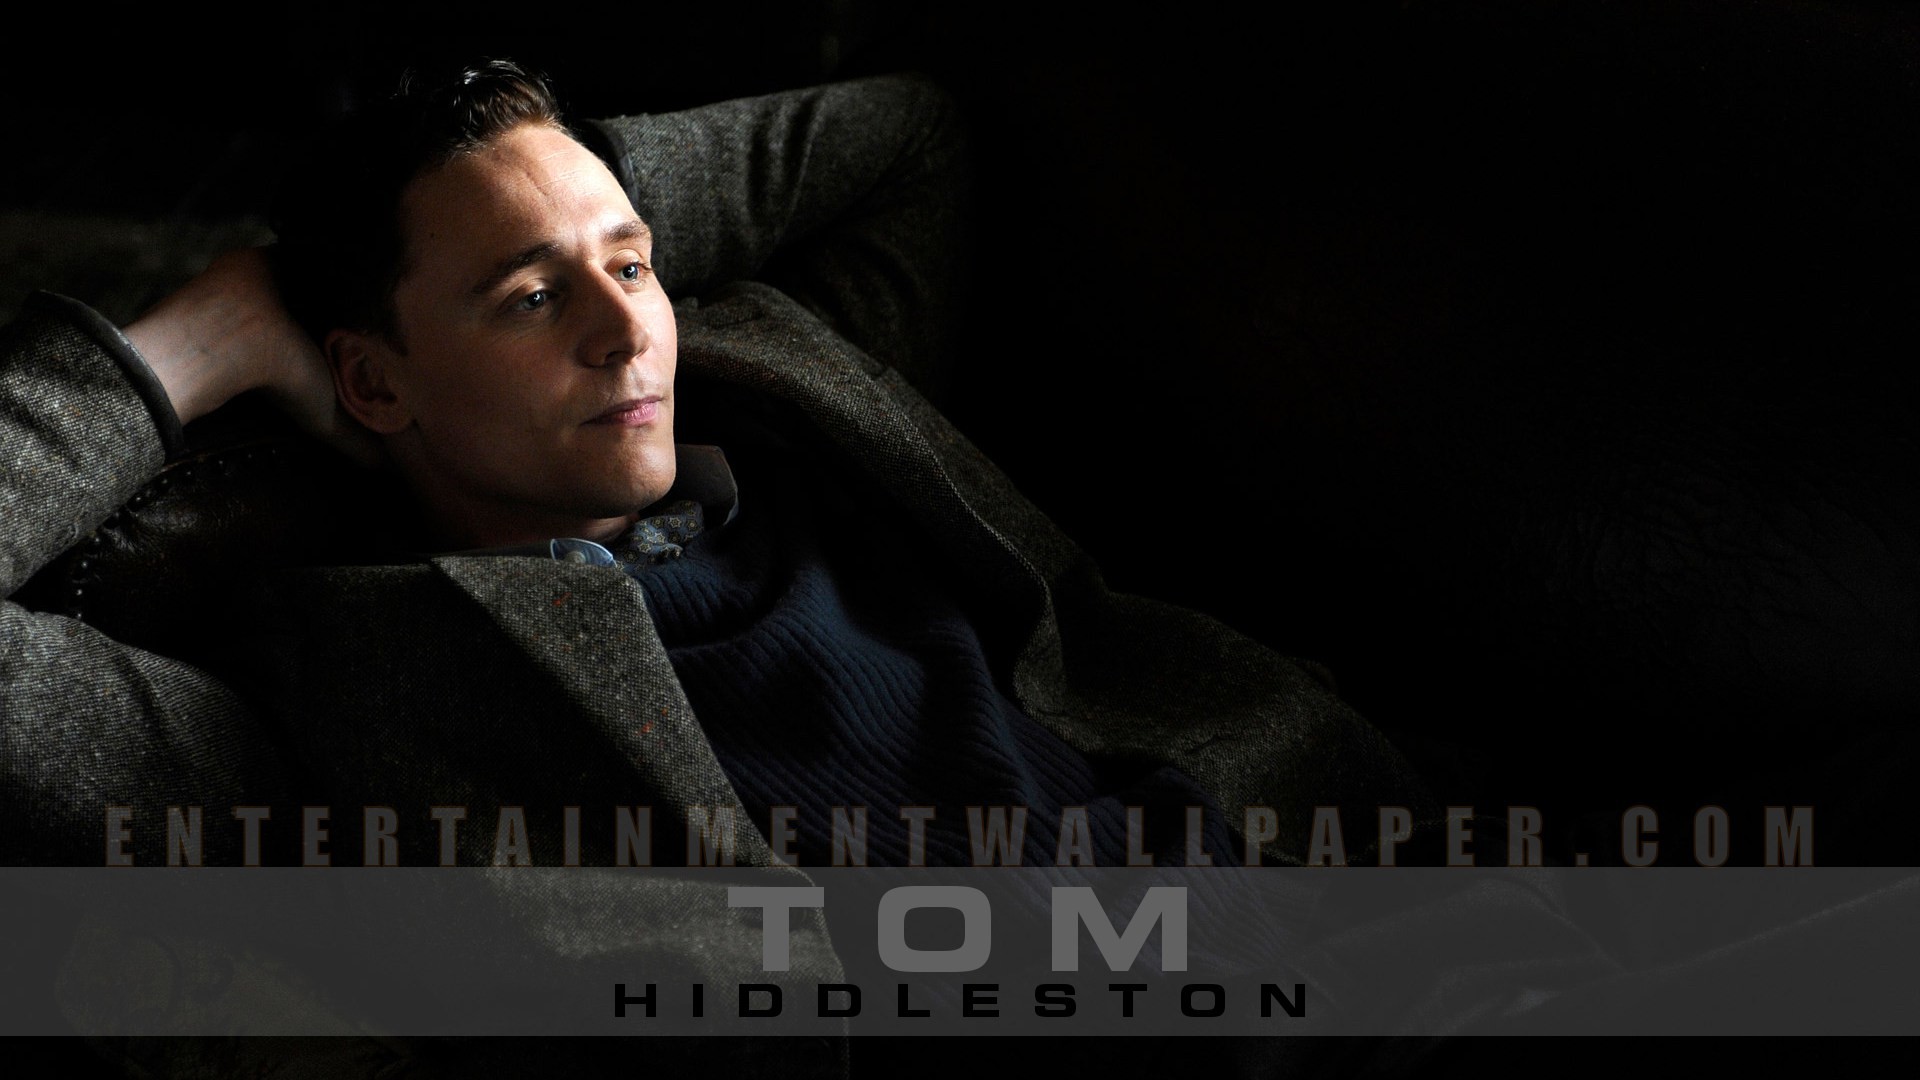 1920x1080 Tom Hiddleston Wallpaper - Original size, download now.